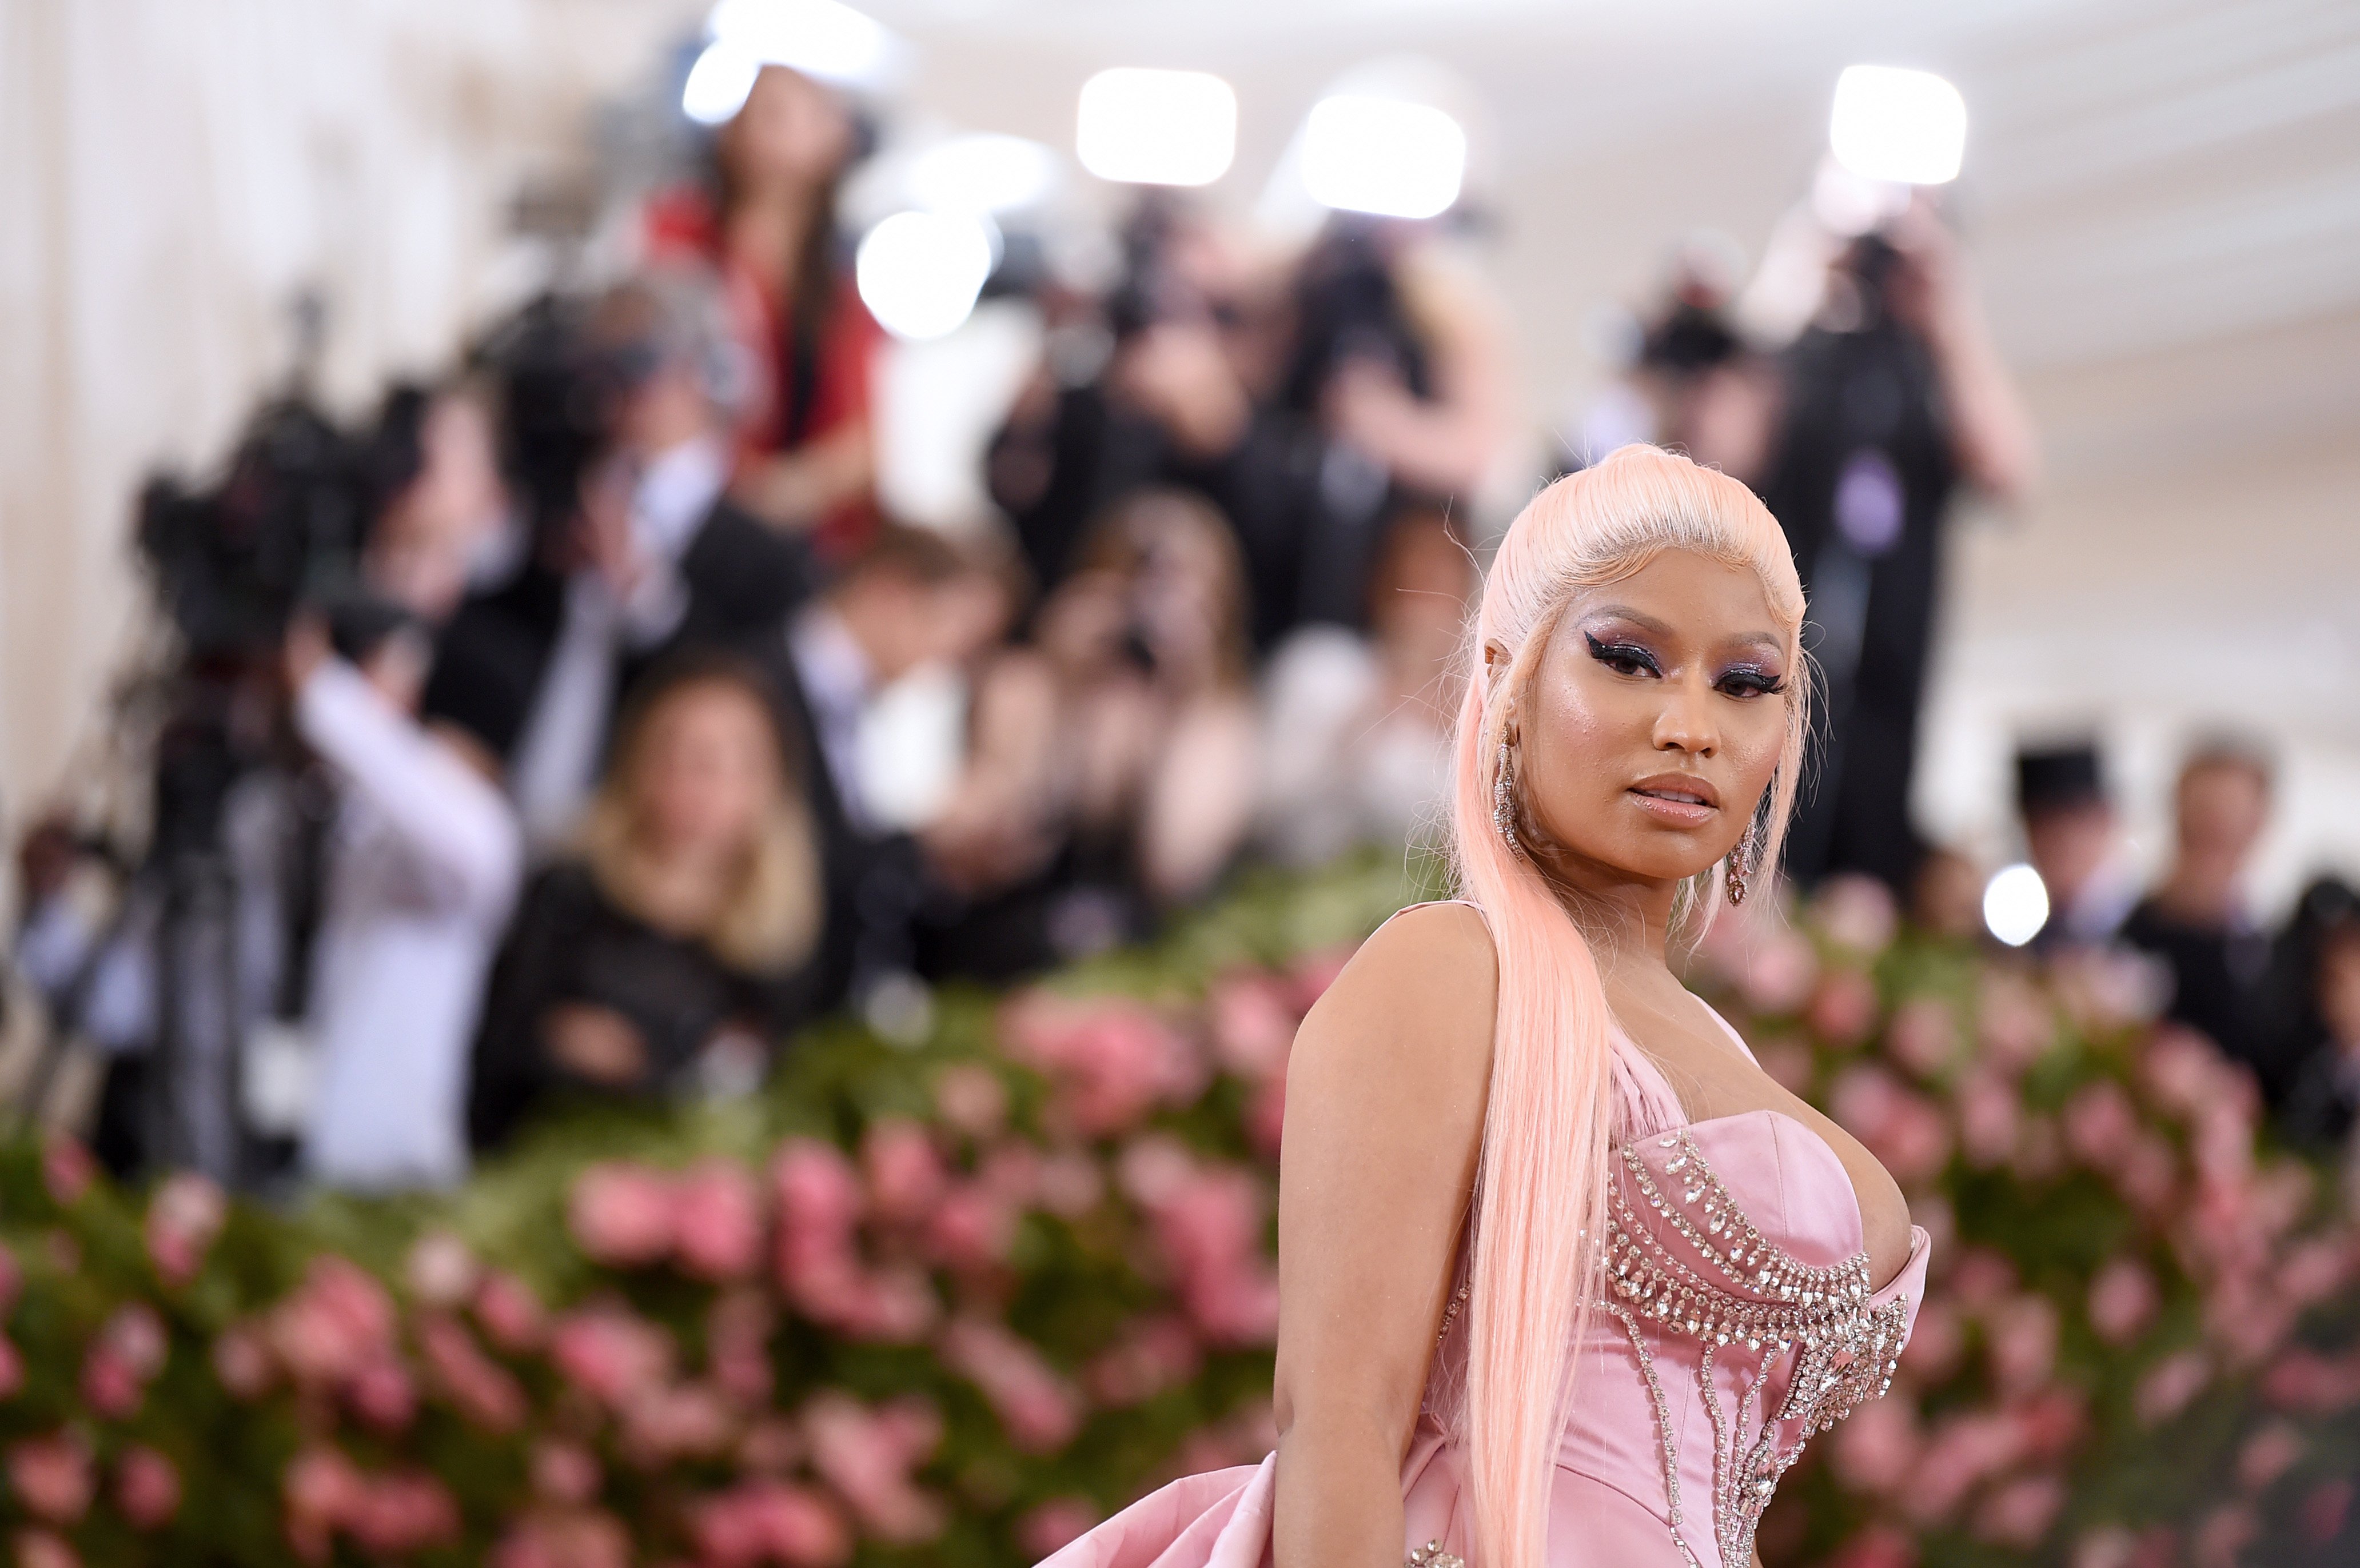 Nicki Minaj at The Met Gala on May 06, 2019 in New York City. | Photo: Getty Images